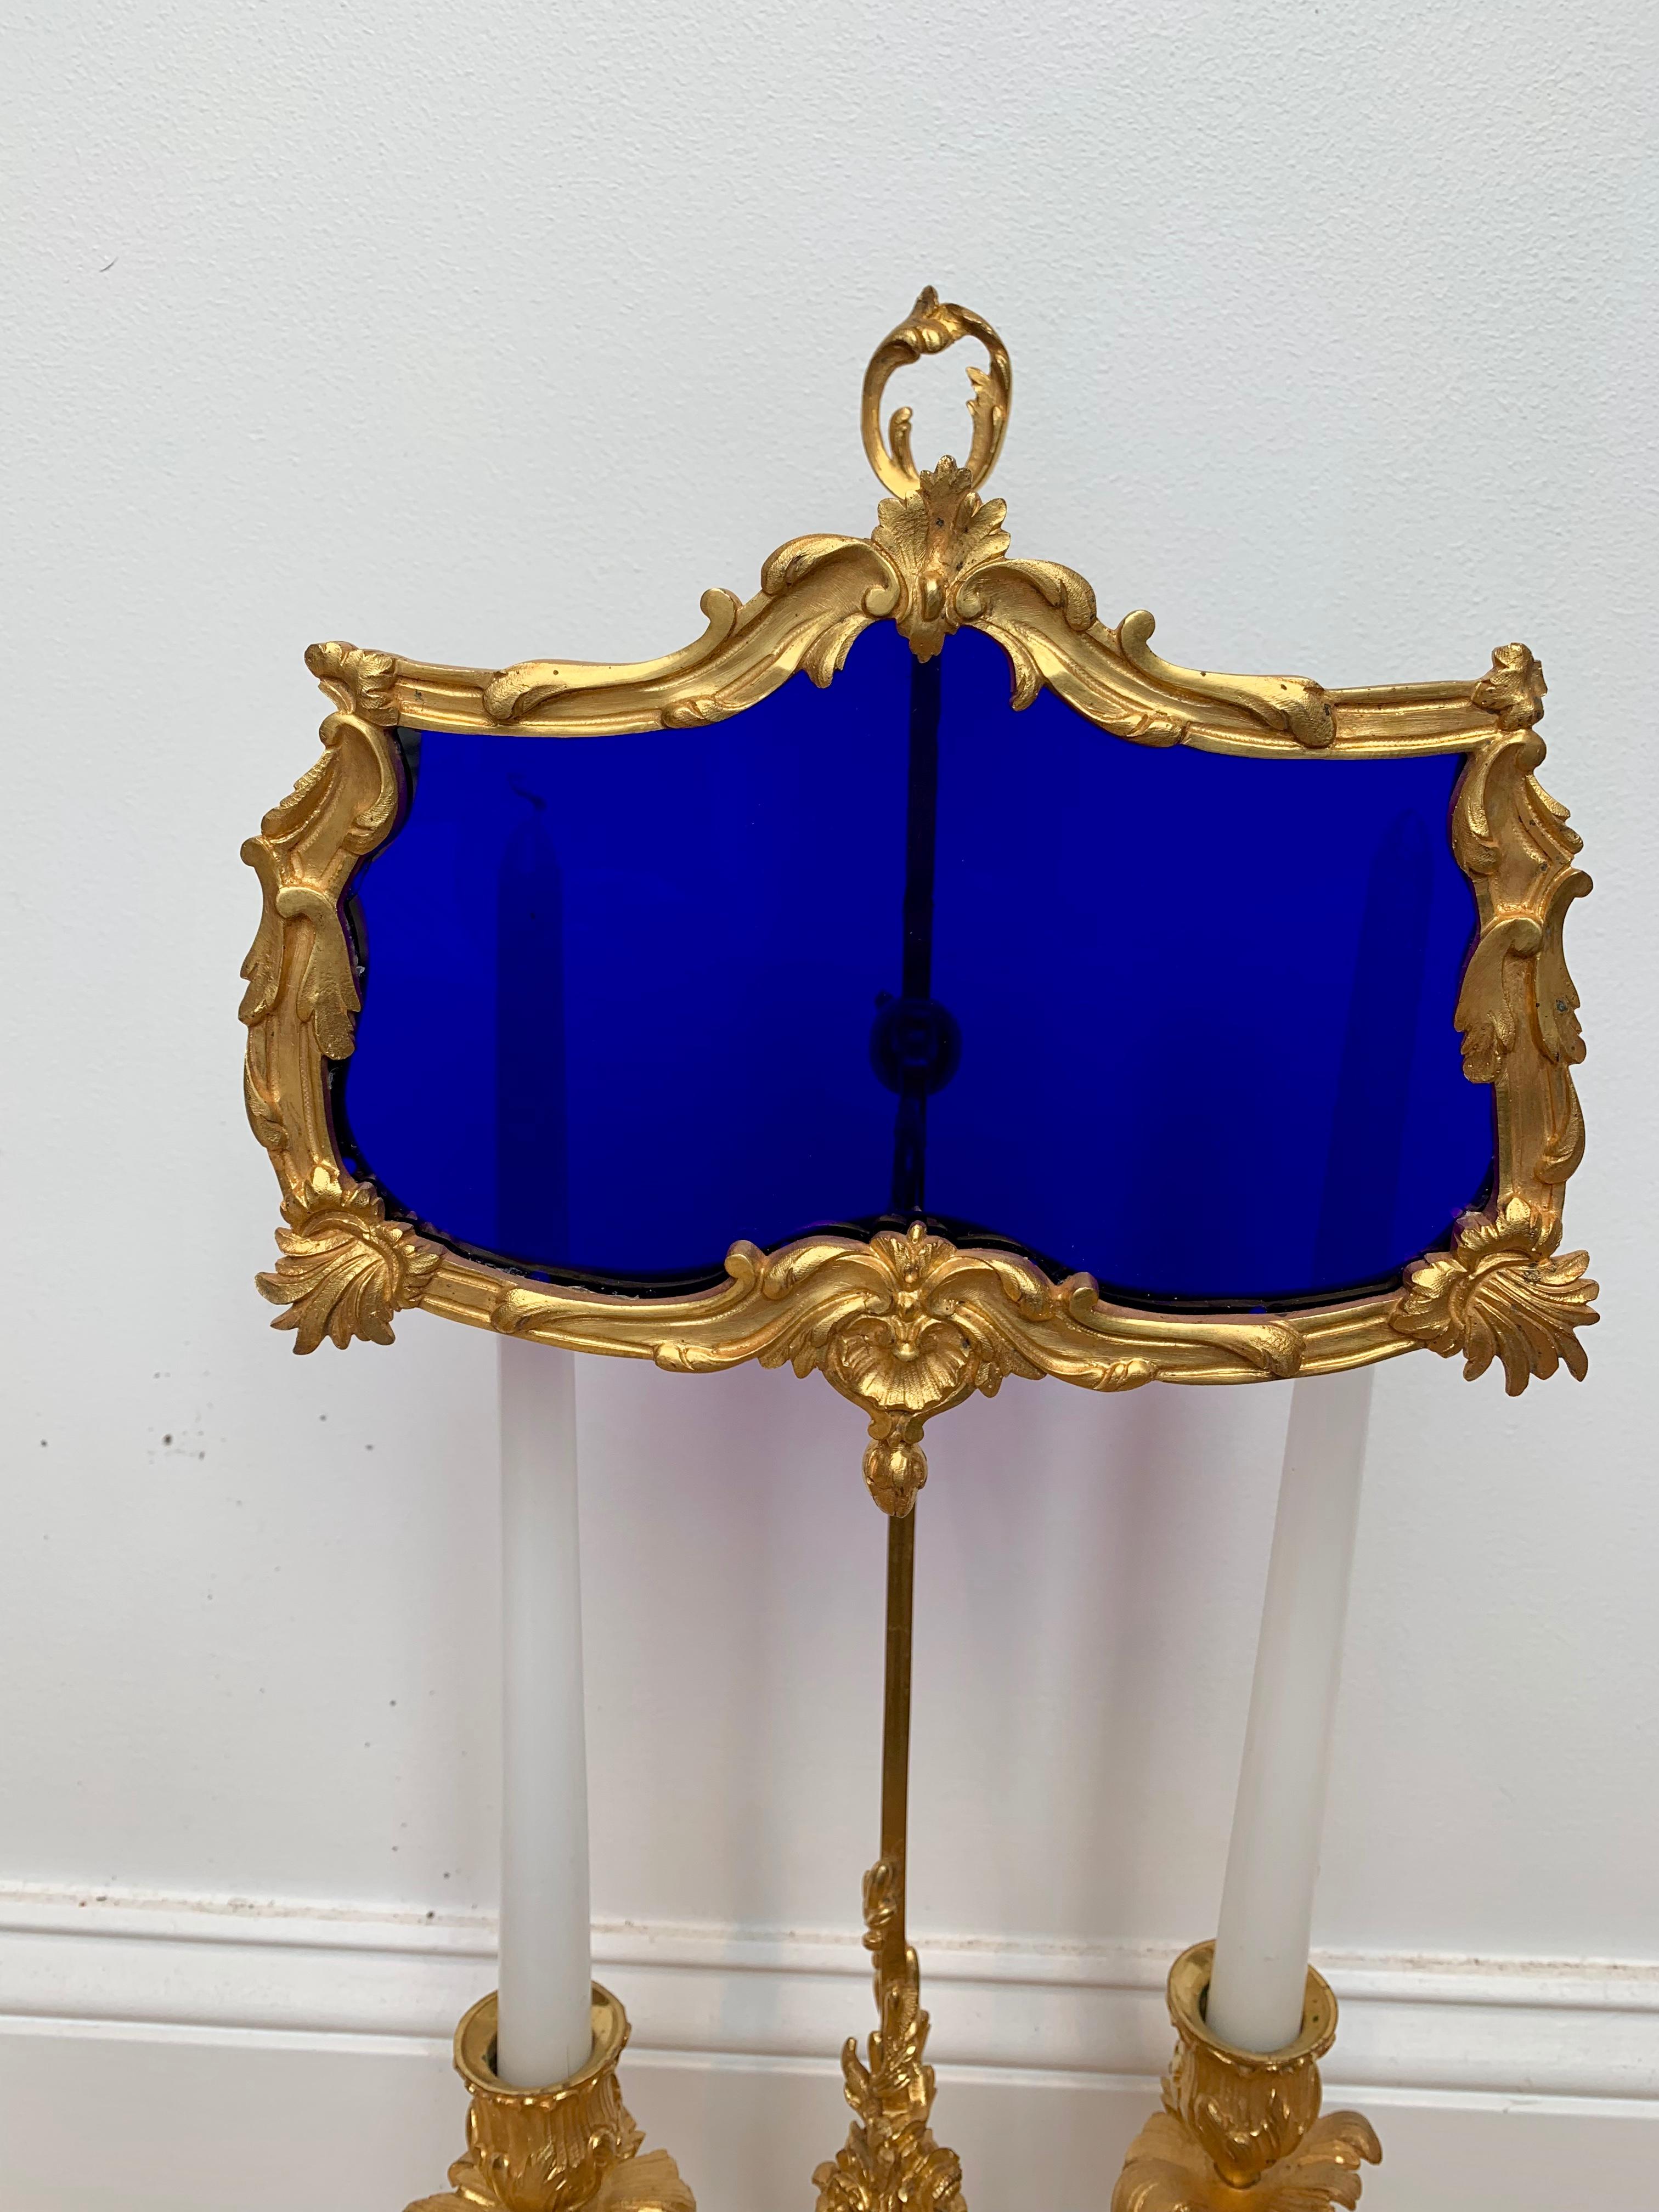 19th Century Ormolu and Cobalt Glass Miracle Bouillotte Lamp (19. Jahrhundert)